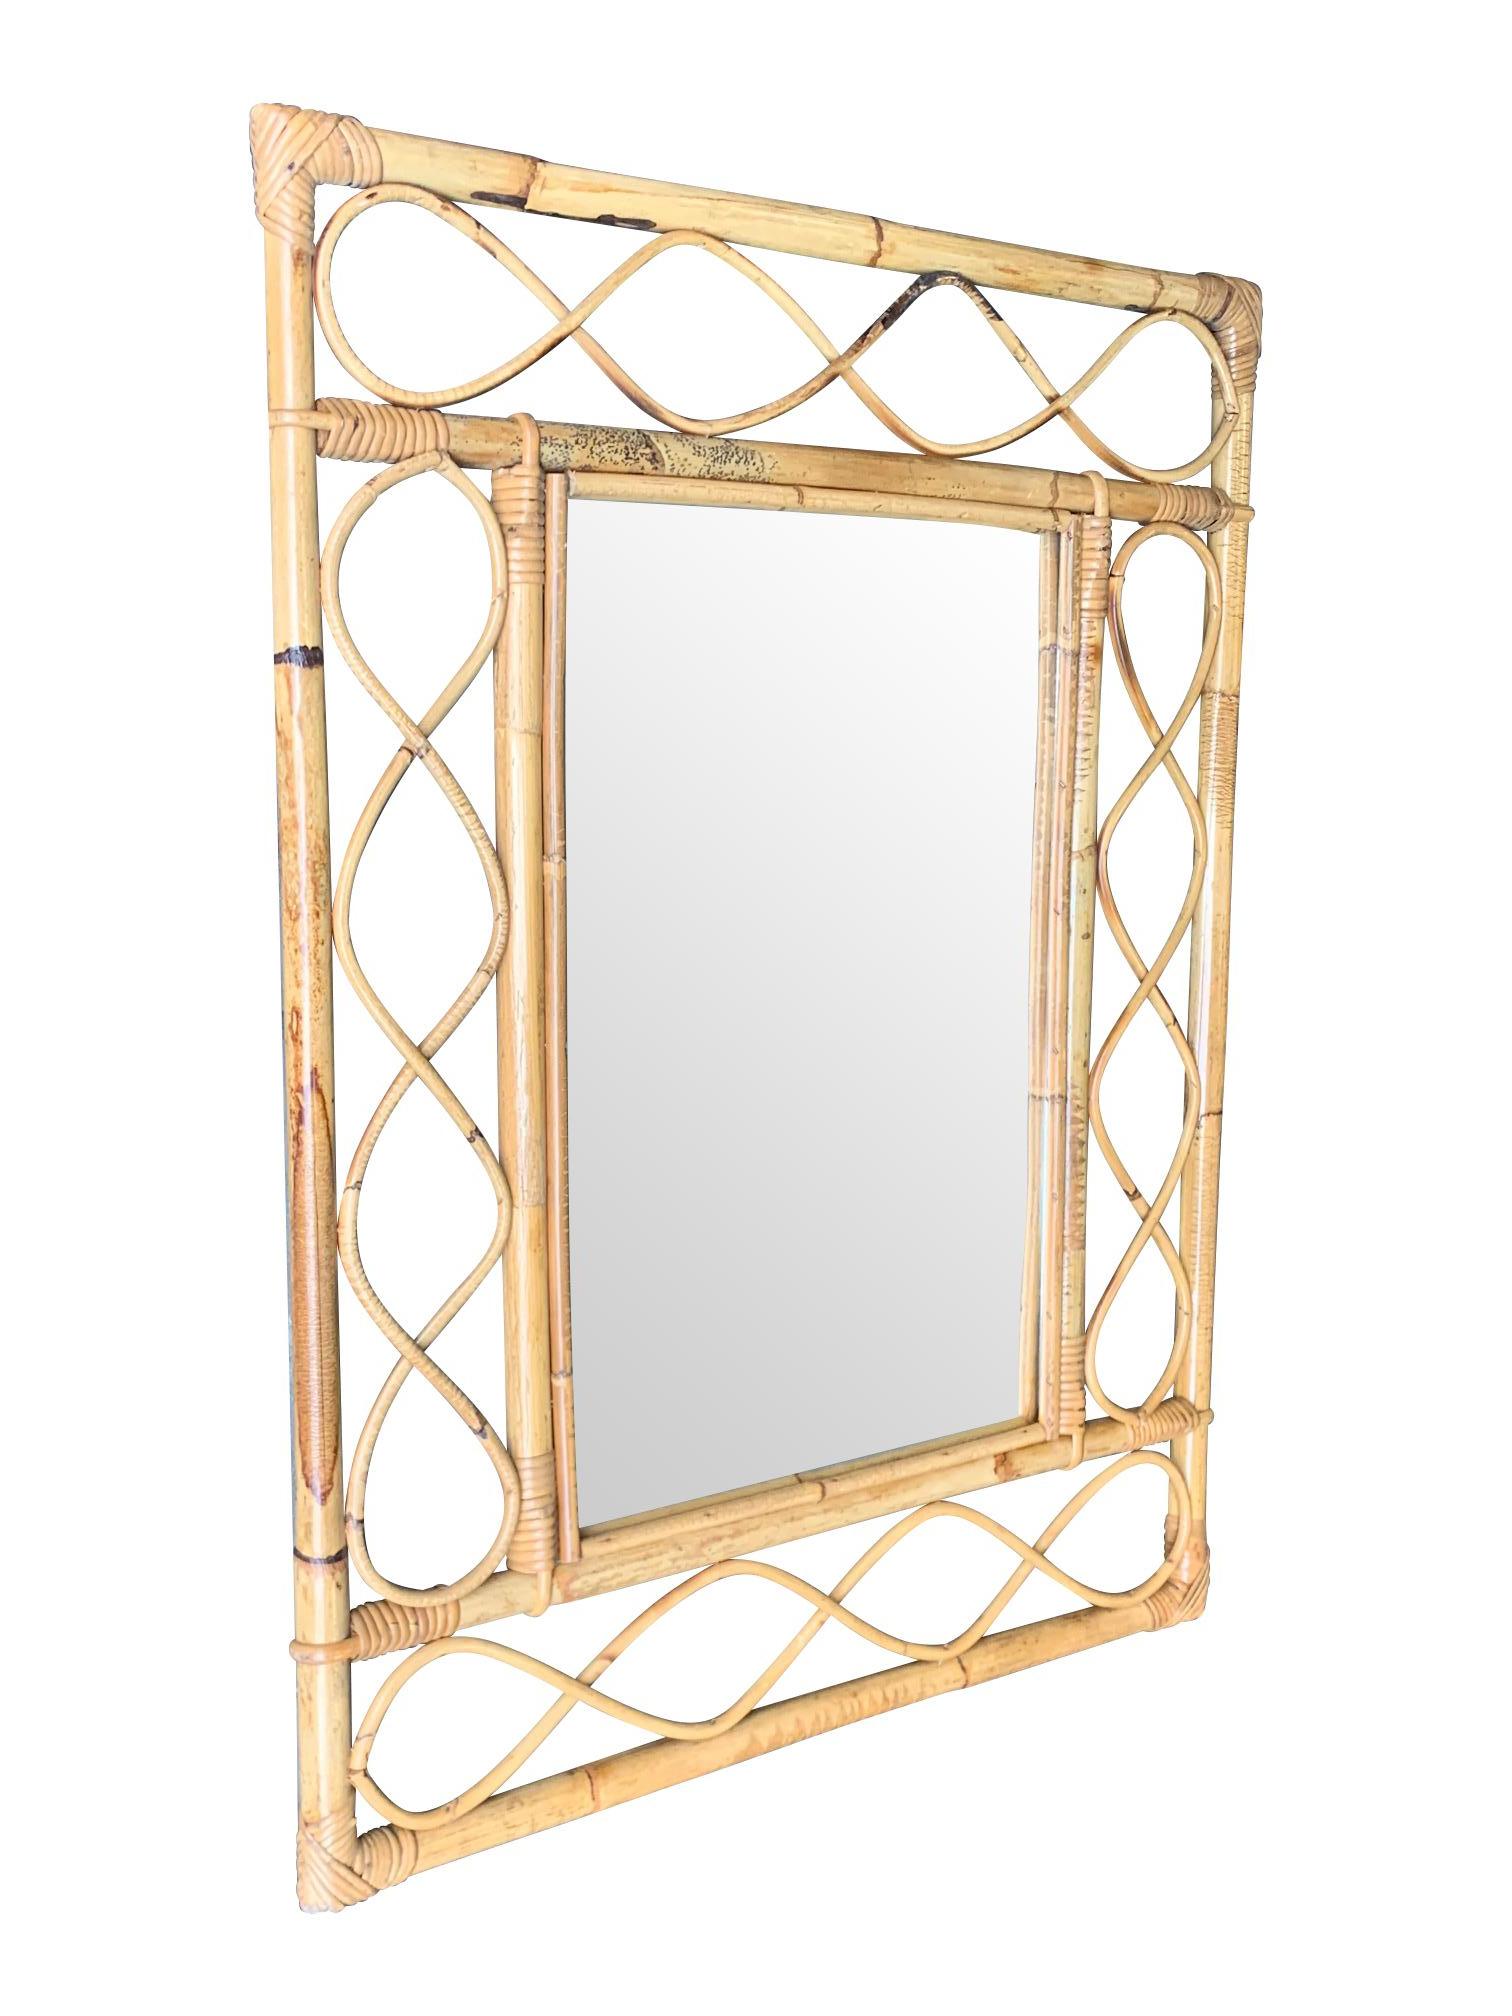 A 1970s Italian Riviera rectangular bamboo mirror with bamboo frame around a central mirror.